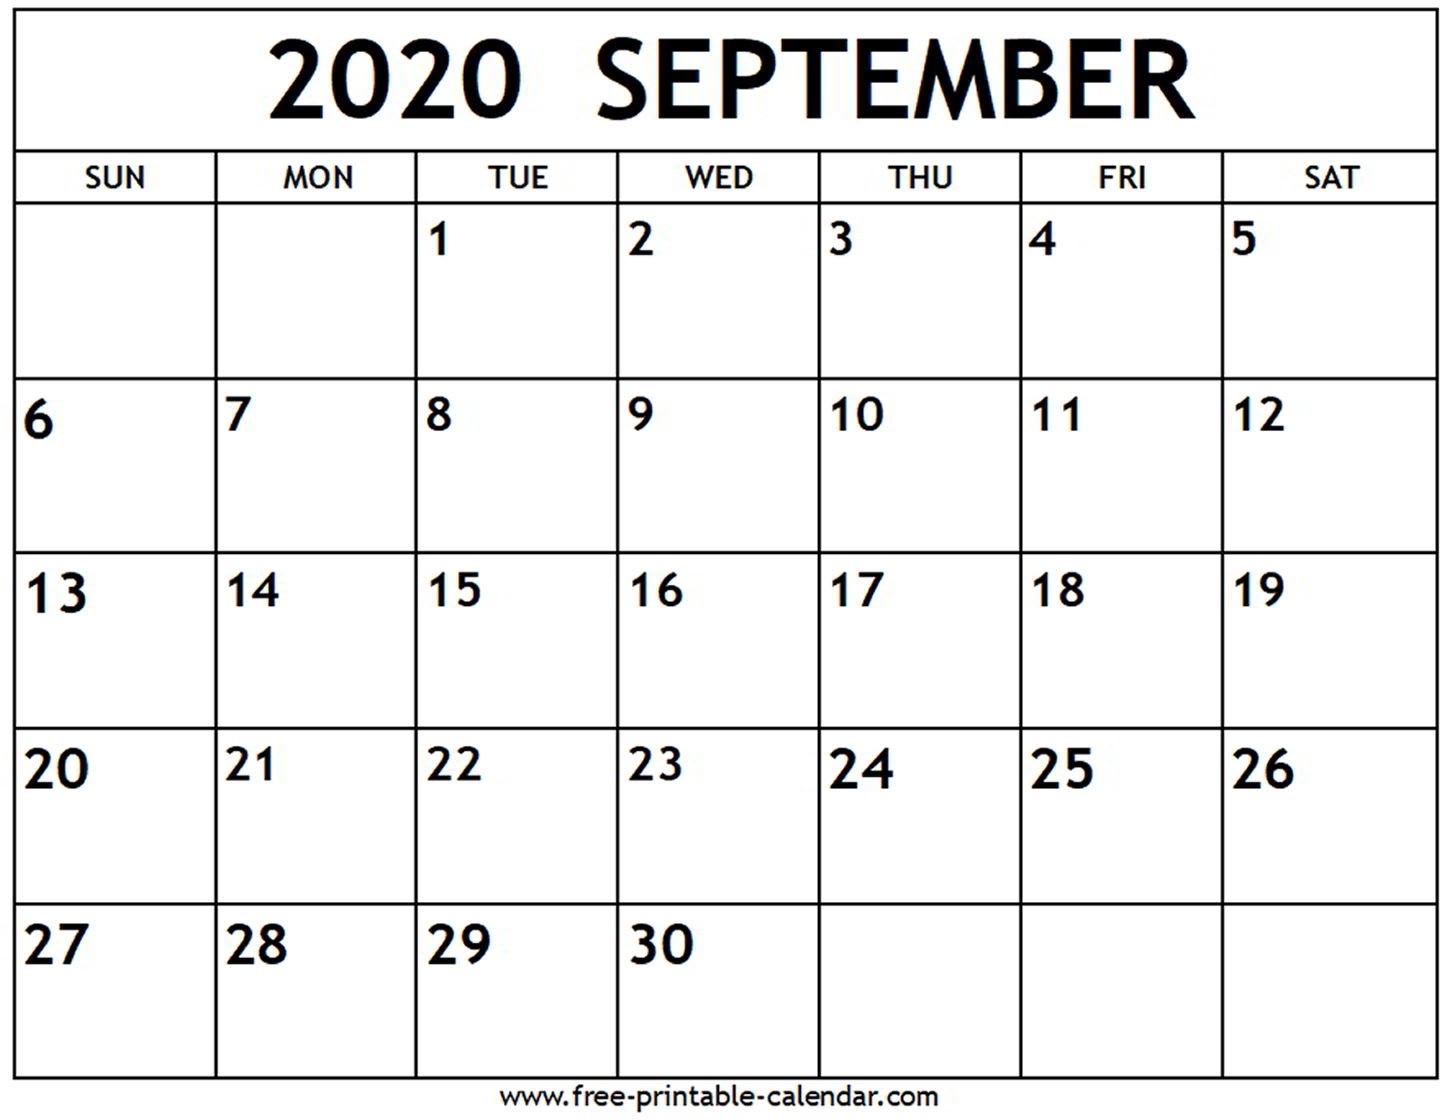 September 2020 Calendar - Free-Printable-Calendar  August To December 2020 Calendar